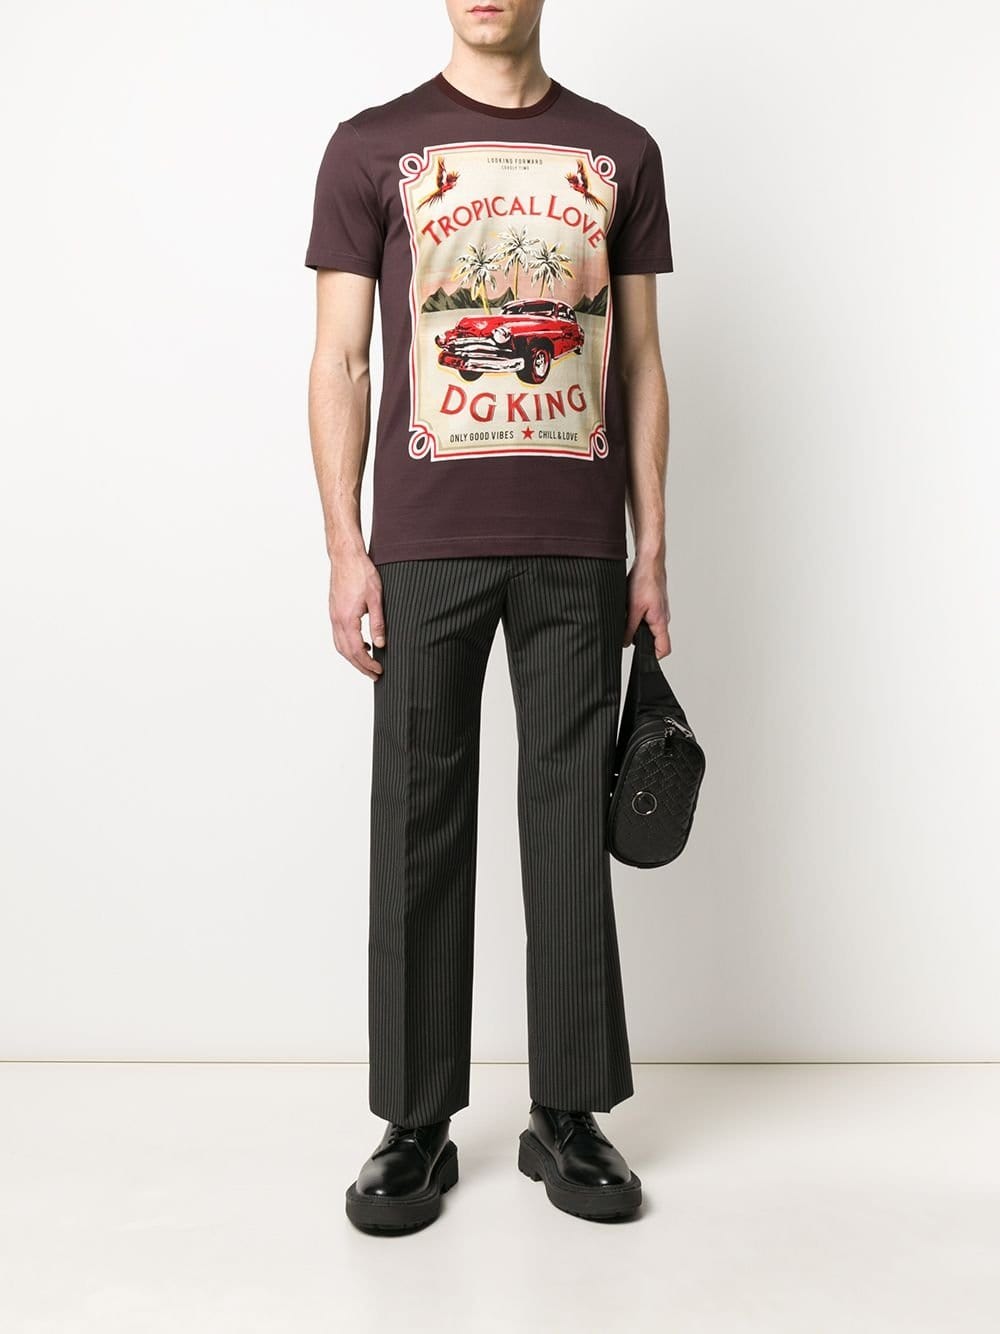 Dolce & Gabbana Tropical Love Short-Sleeved T-Shirt